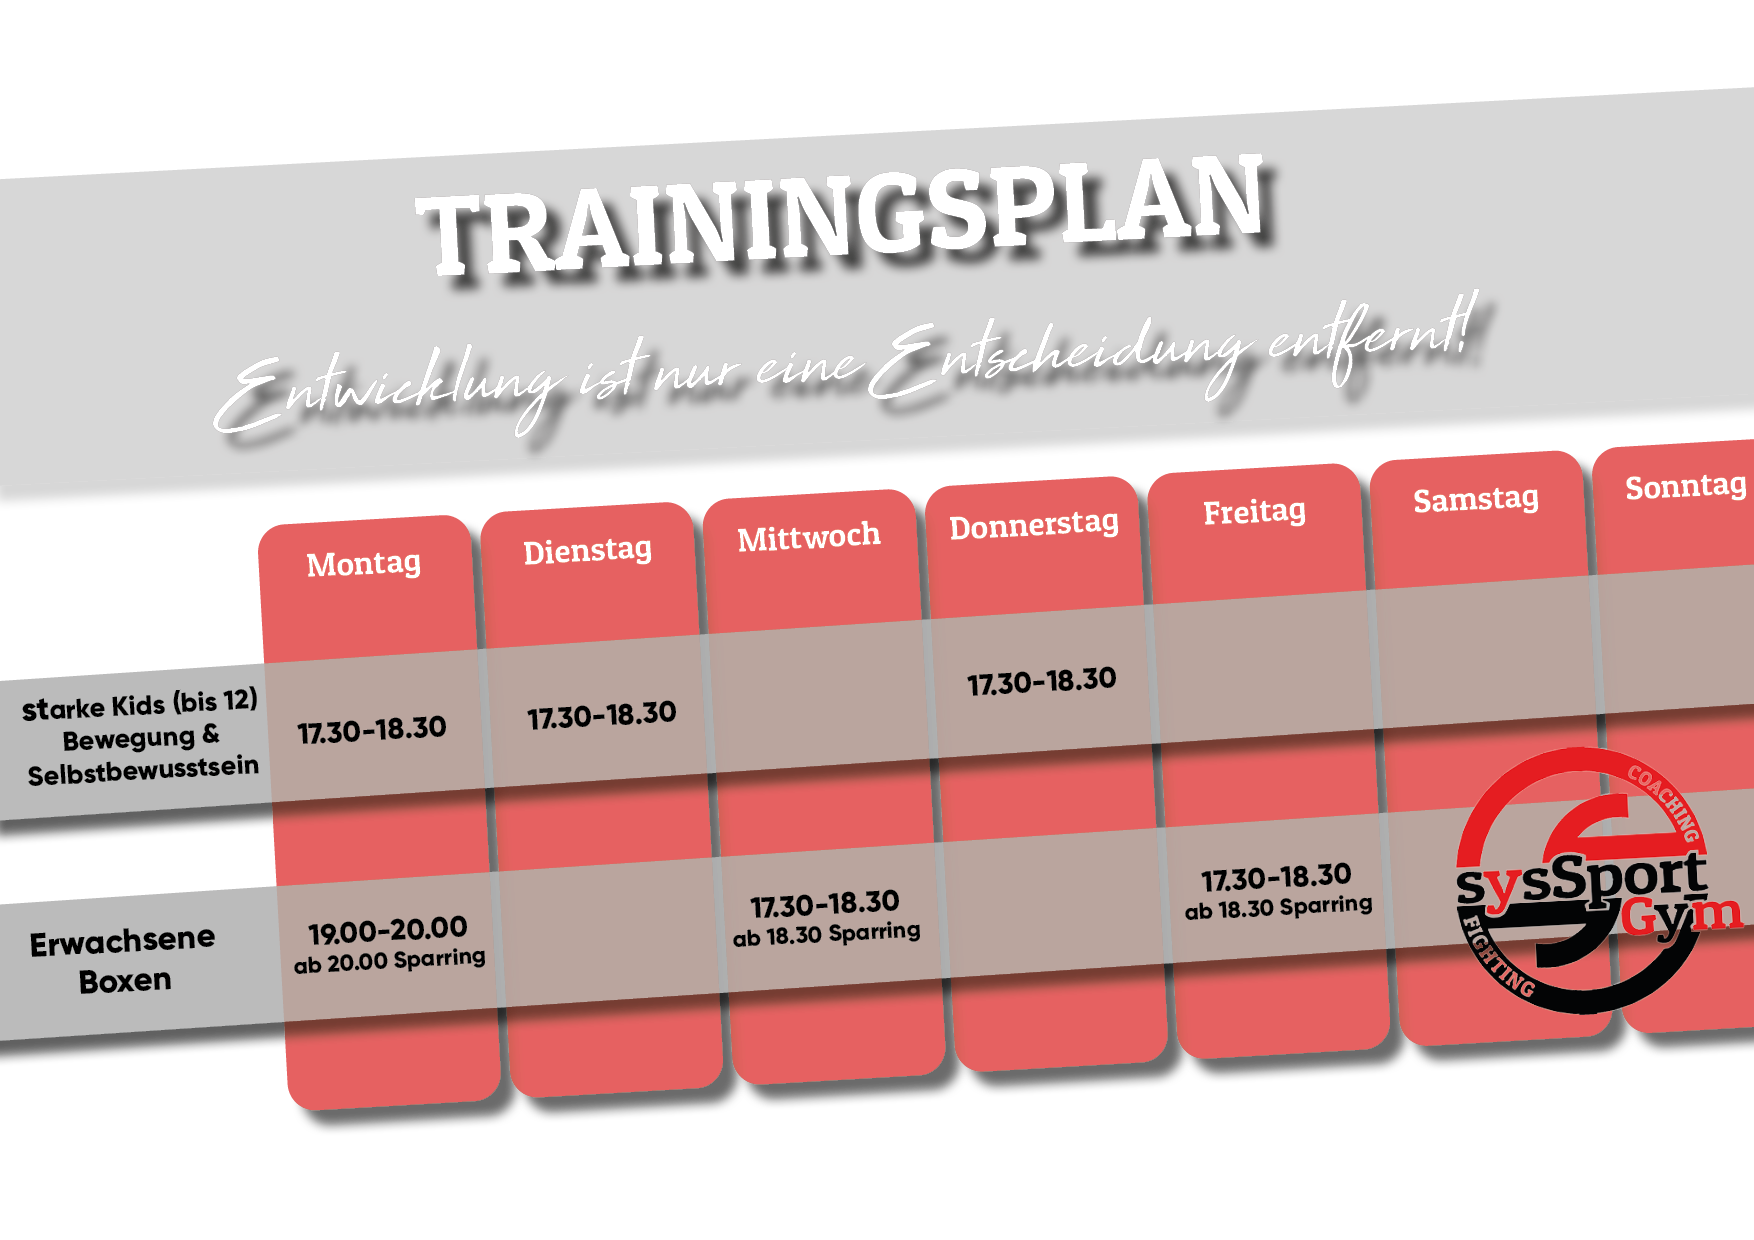 Trainingsplan München Trudering